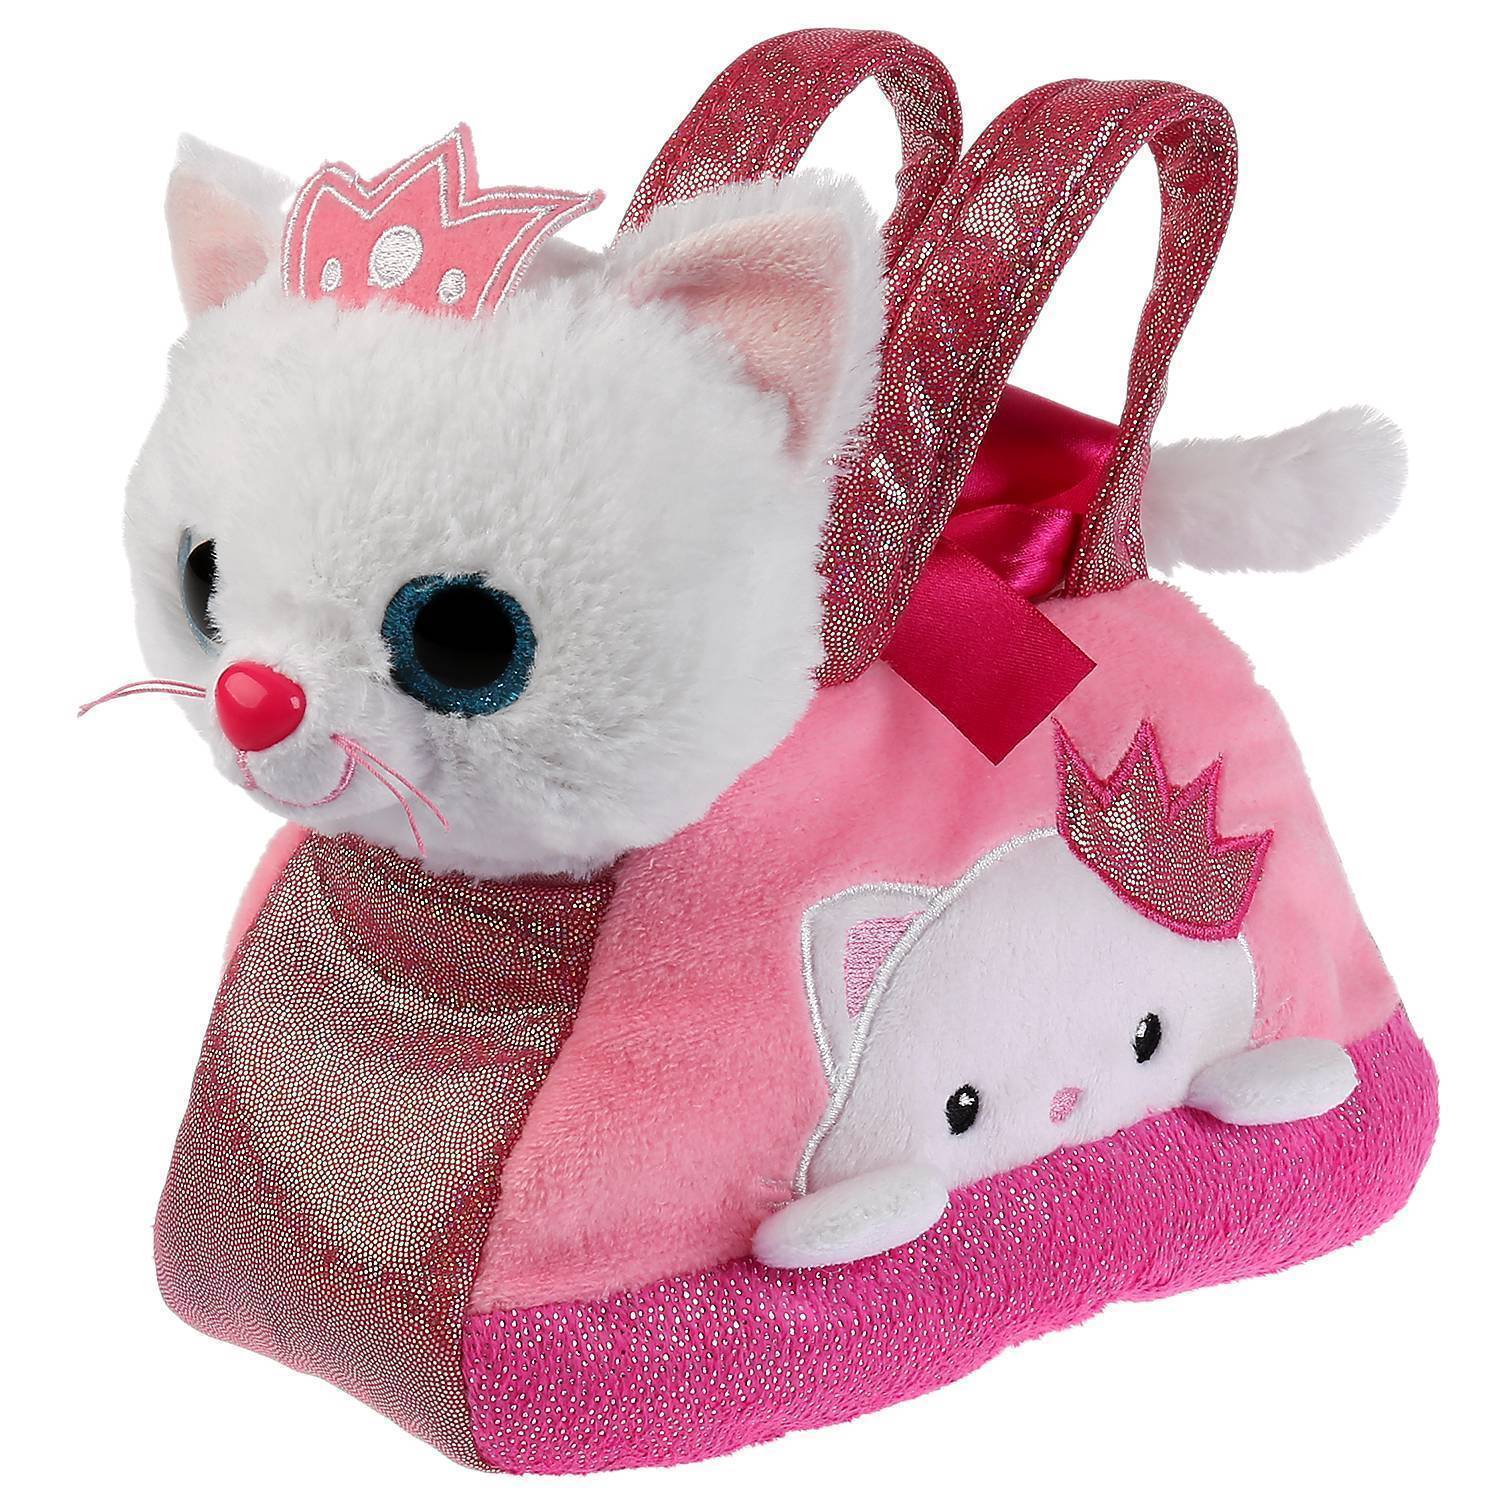 Игрушка питомец. Ct181197-20 мягкая игрушка кошка в сумочке 15 см. Мягкая игрушка Trudi котёнок в сумочке 20 см. Мягкая игрушка кошка Бетти. Мягкая игрушка кошка с котятами.